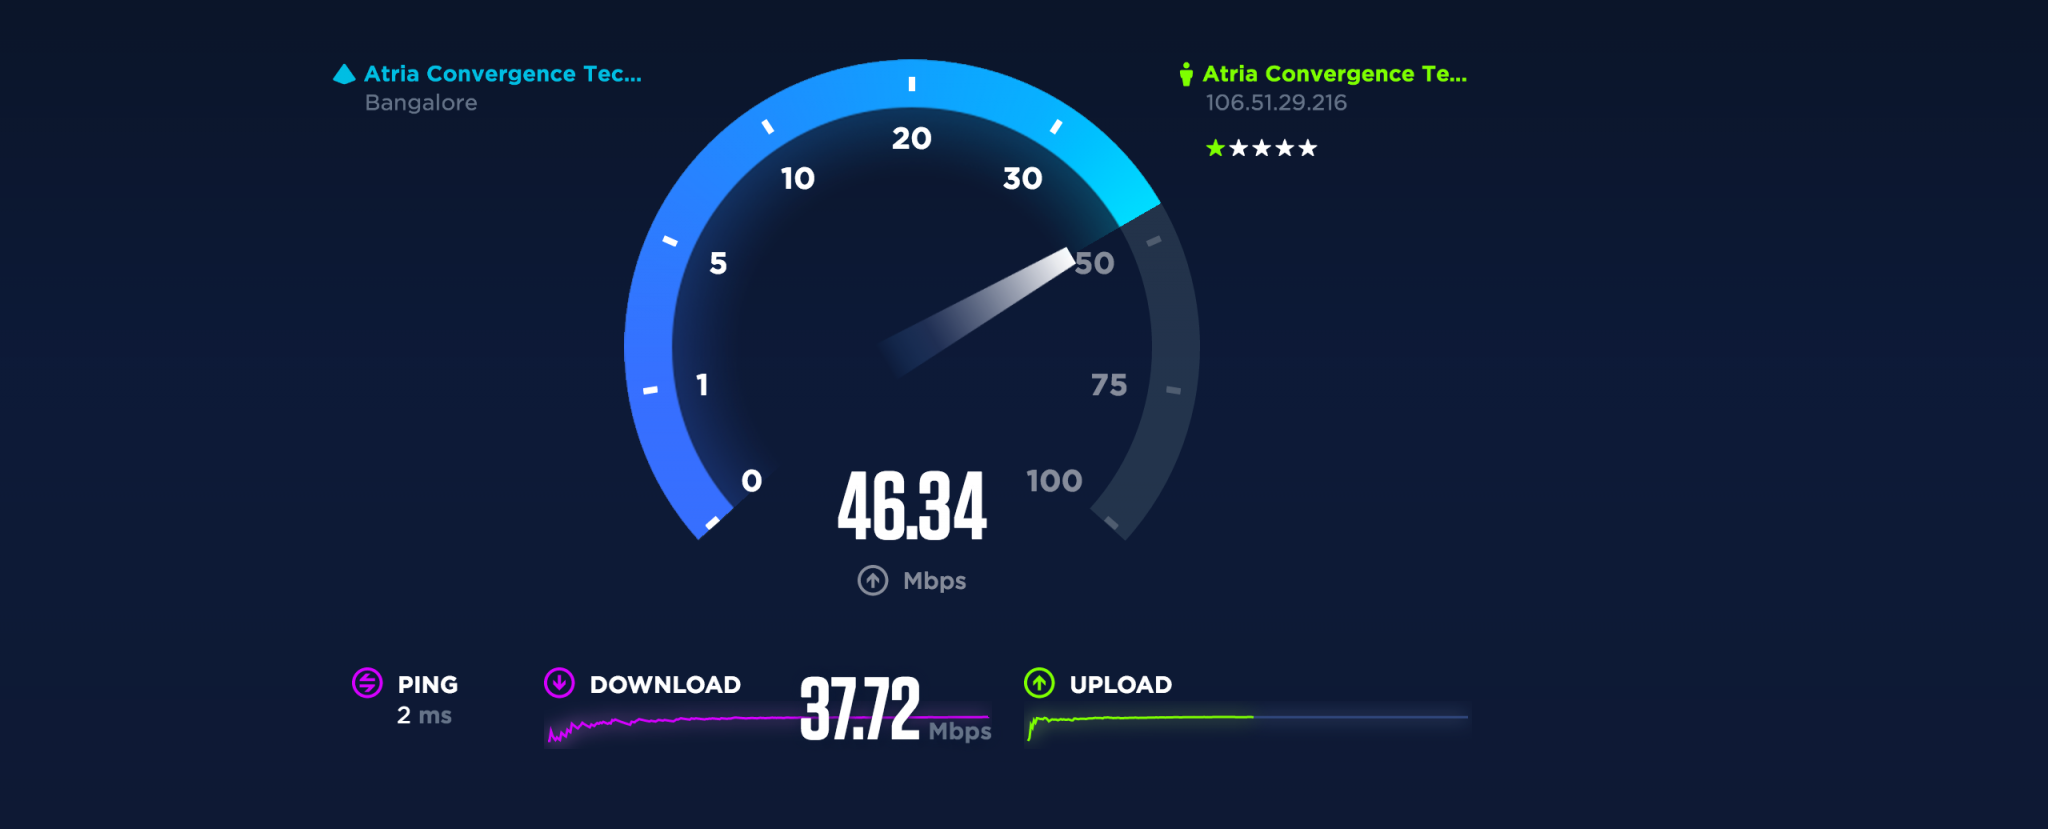 Скорость интернета. Тест скорости интернета. Спидтест скорости интернета. Хорошая скорость интернета.